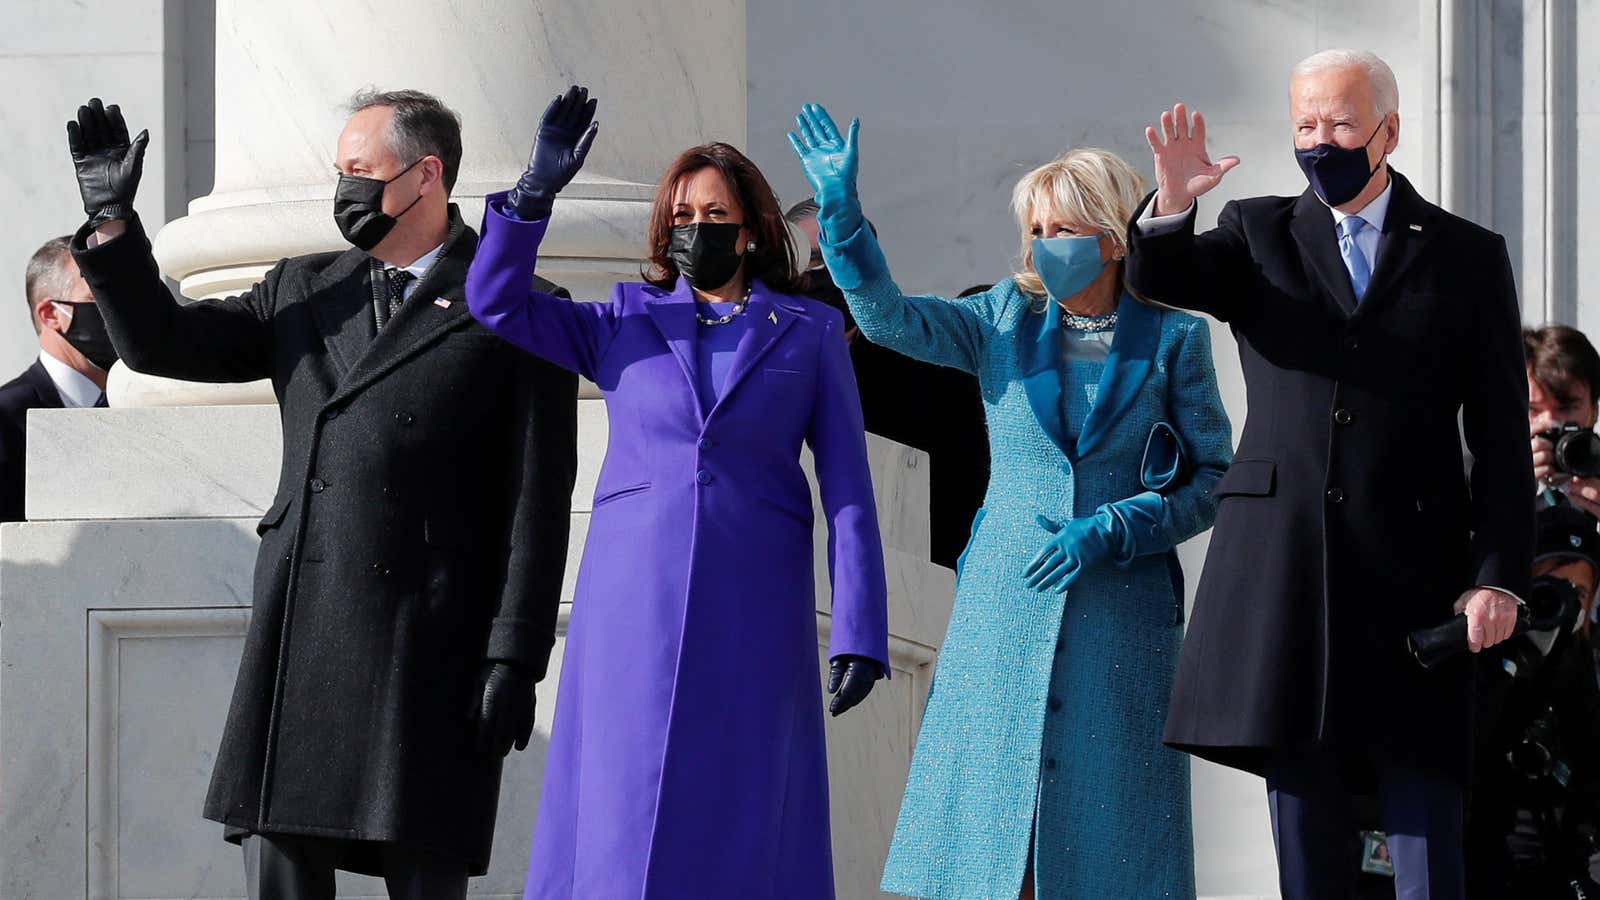 From left, Doug Emhoff, Kamala Harris, Jill Biden, and Joe Biden all dressed up for the inauguration.